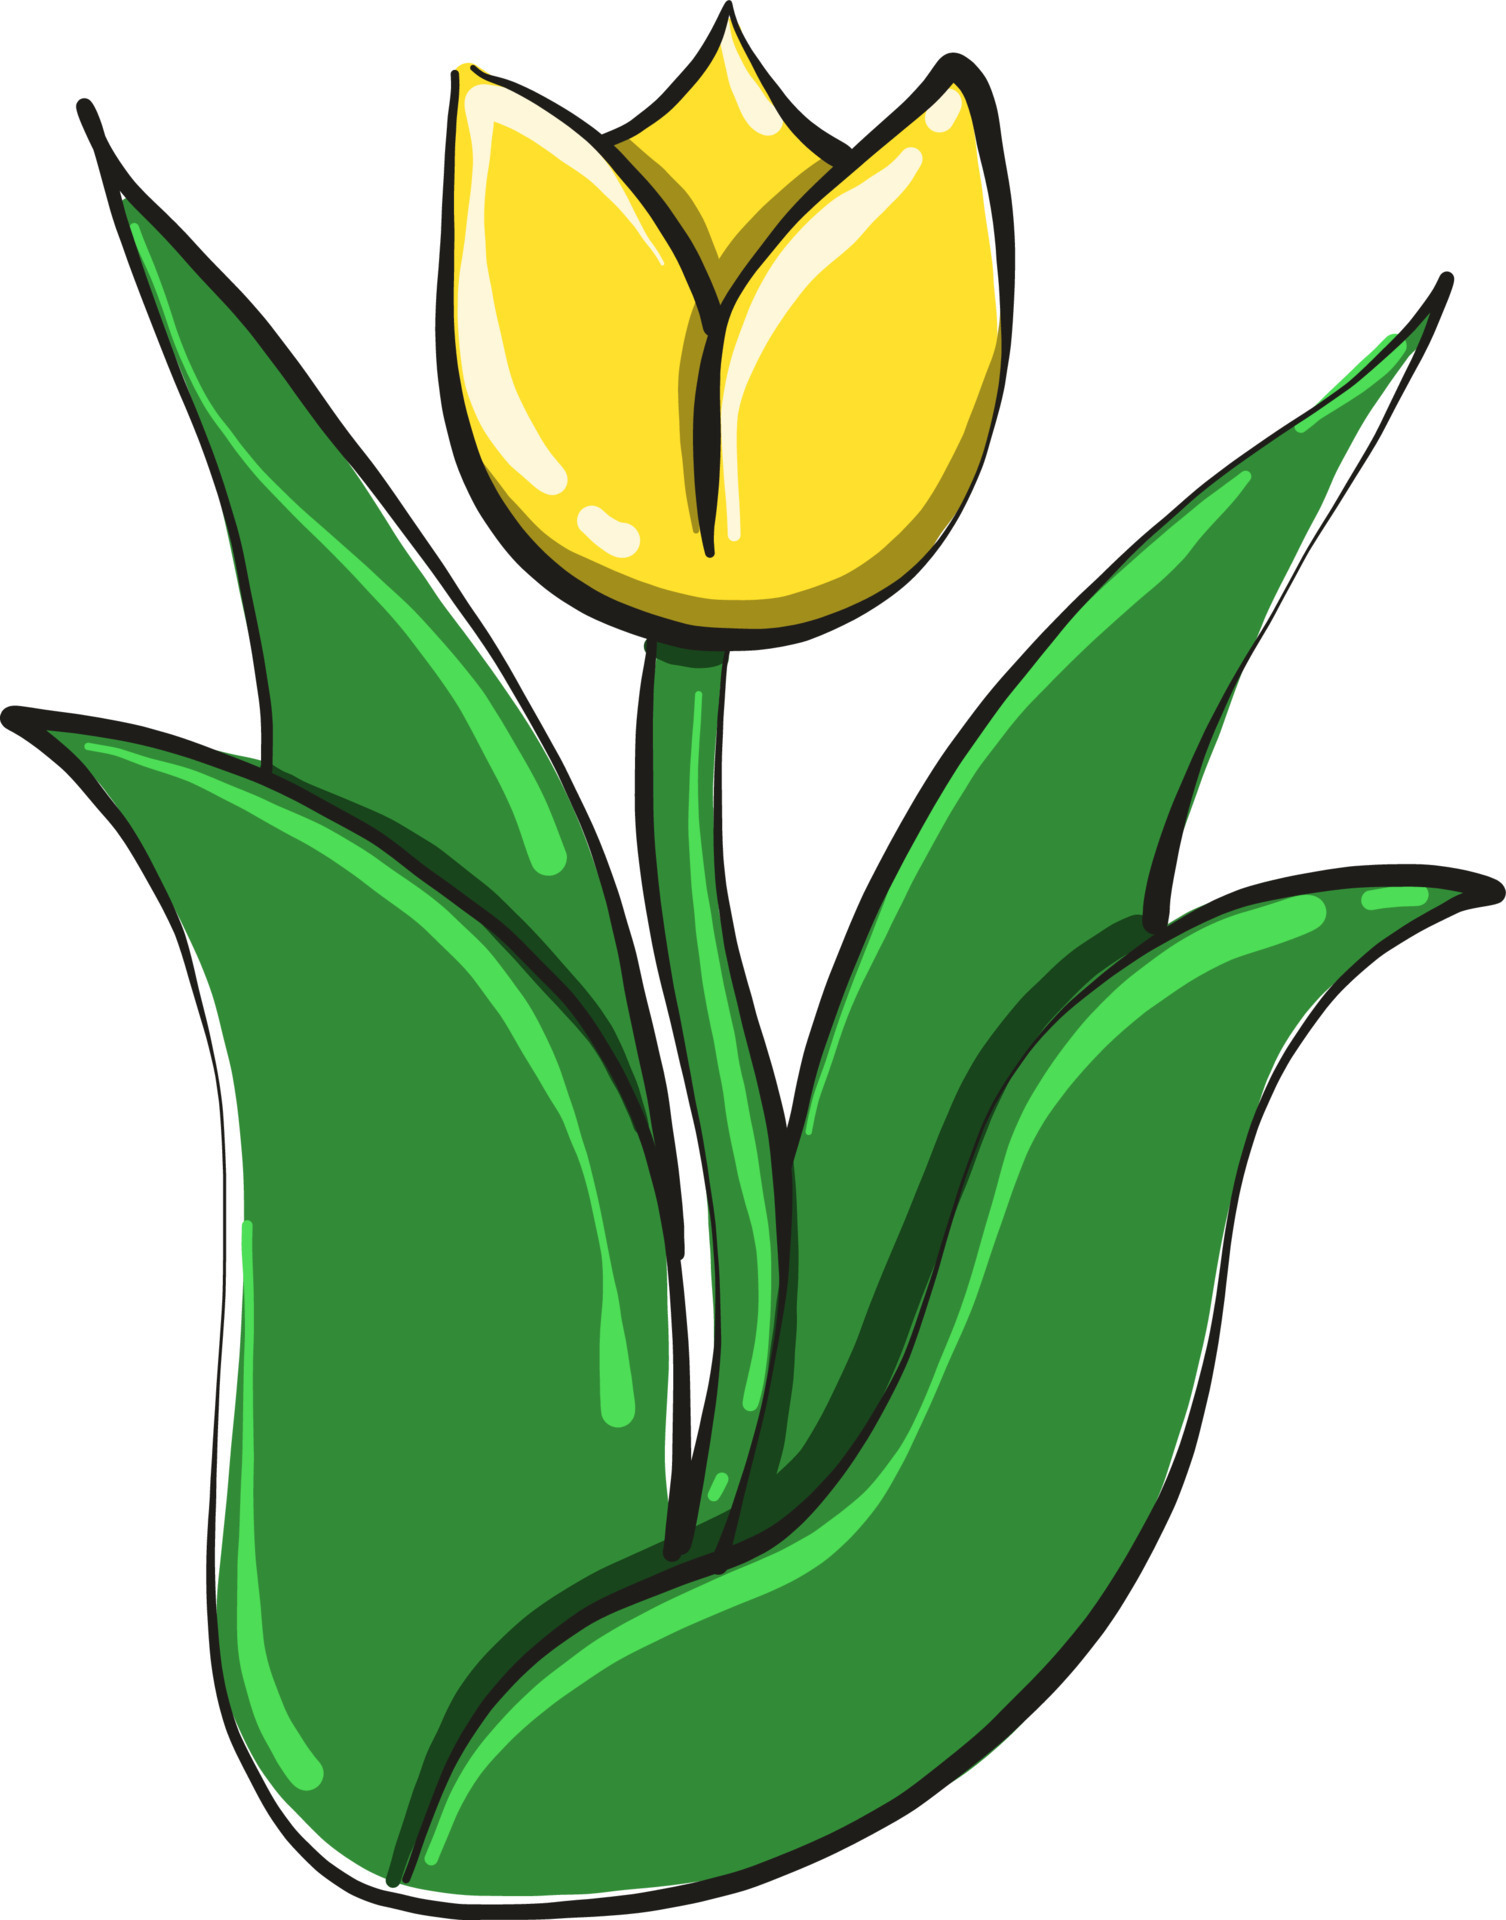 Yellow flower ,illustration, vector on white background 13510008 Vector ...